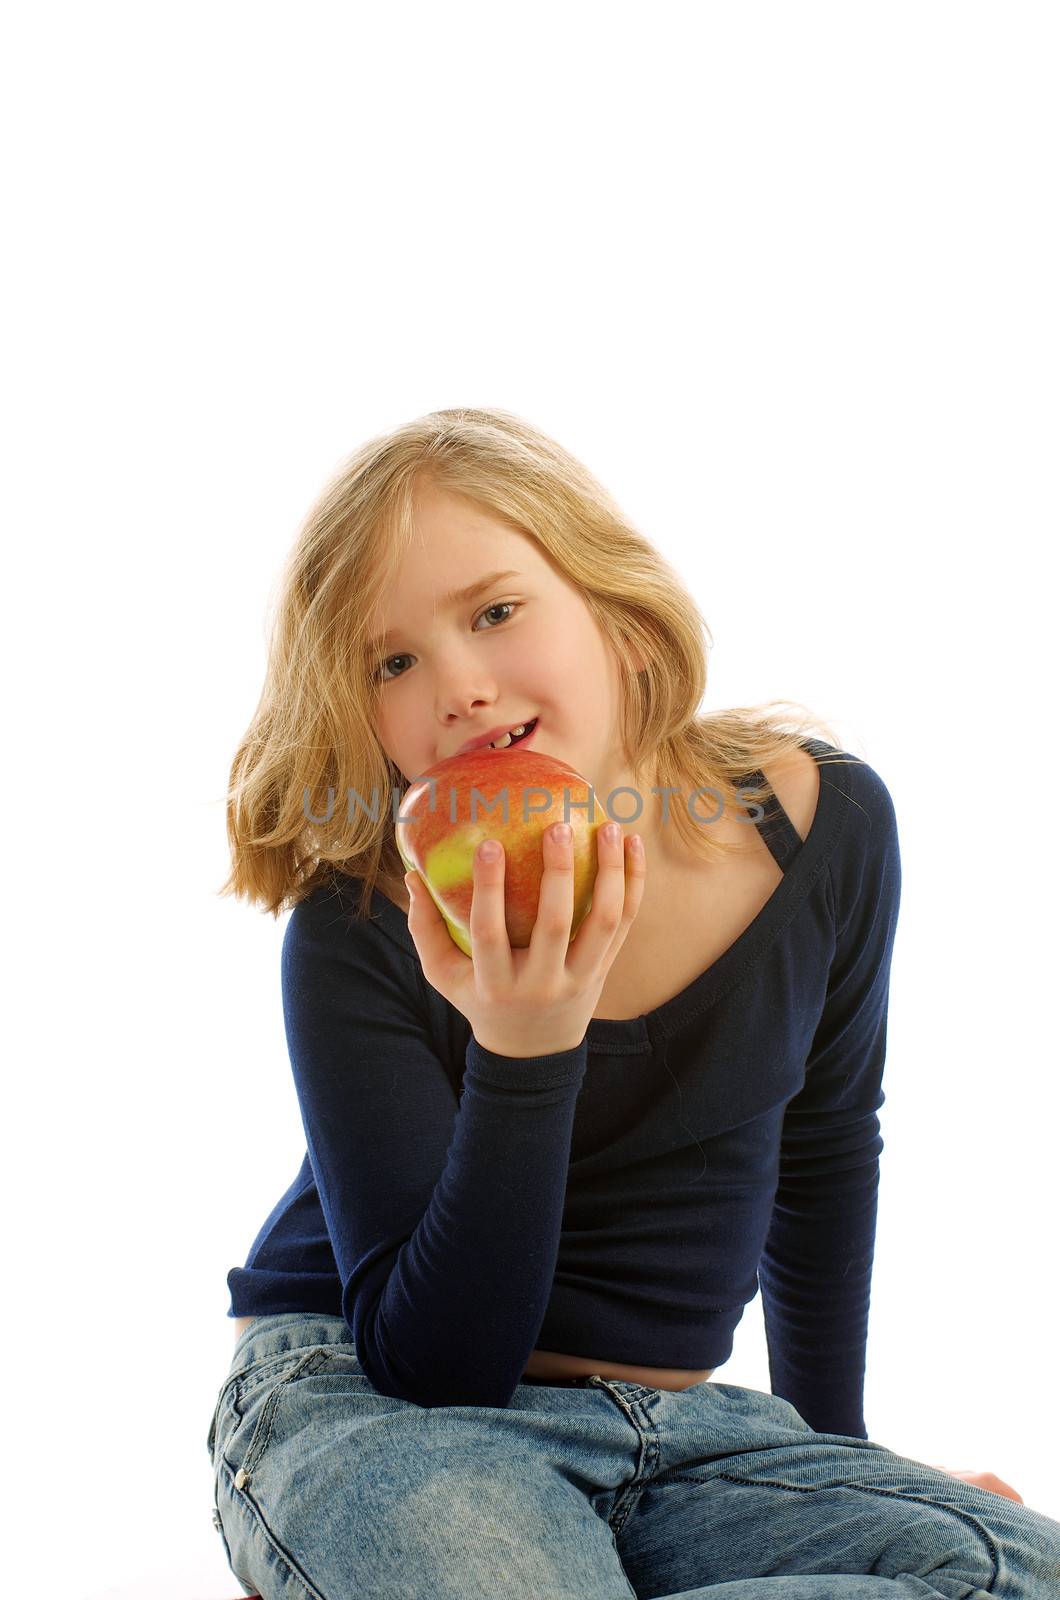 Blonde Girl Eating an Apple on white background